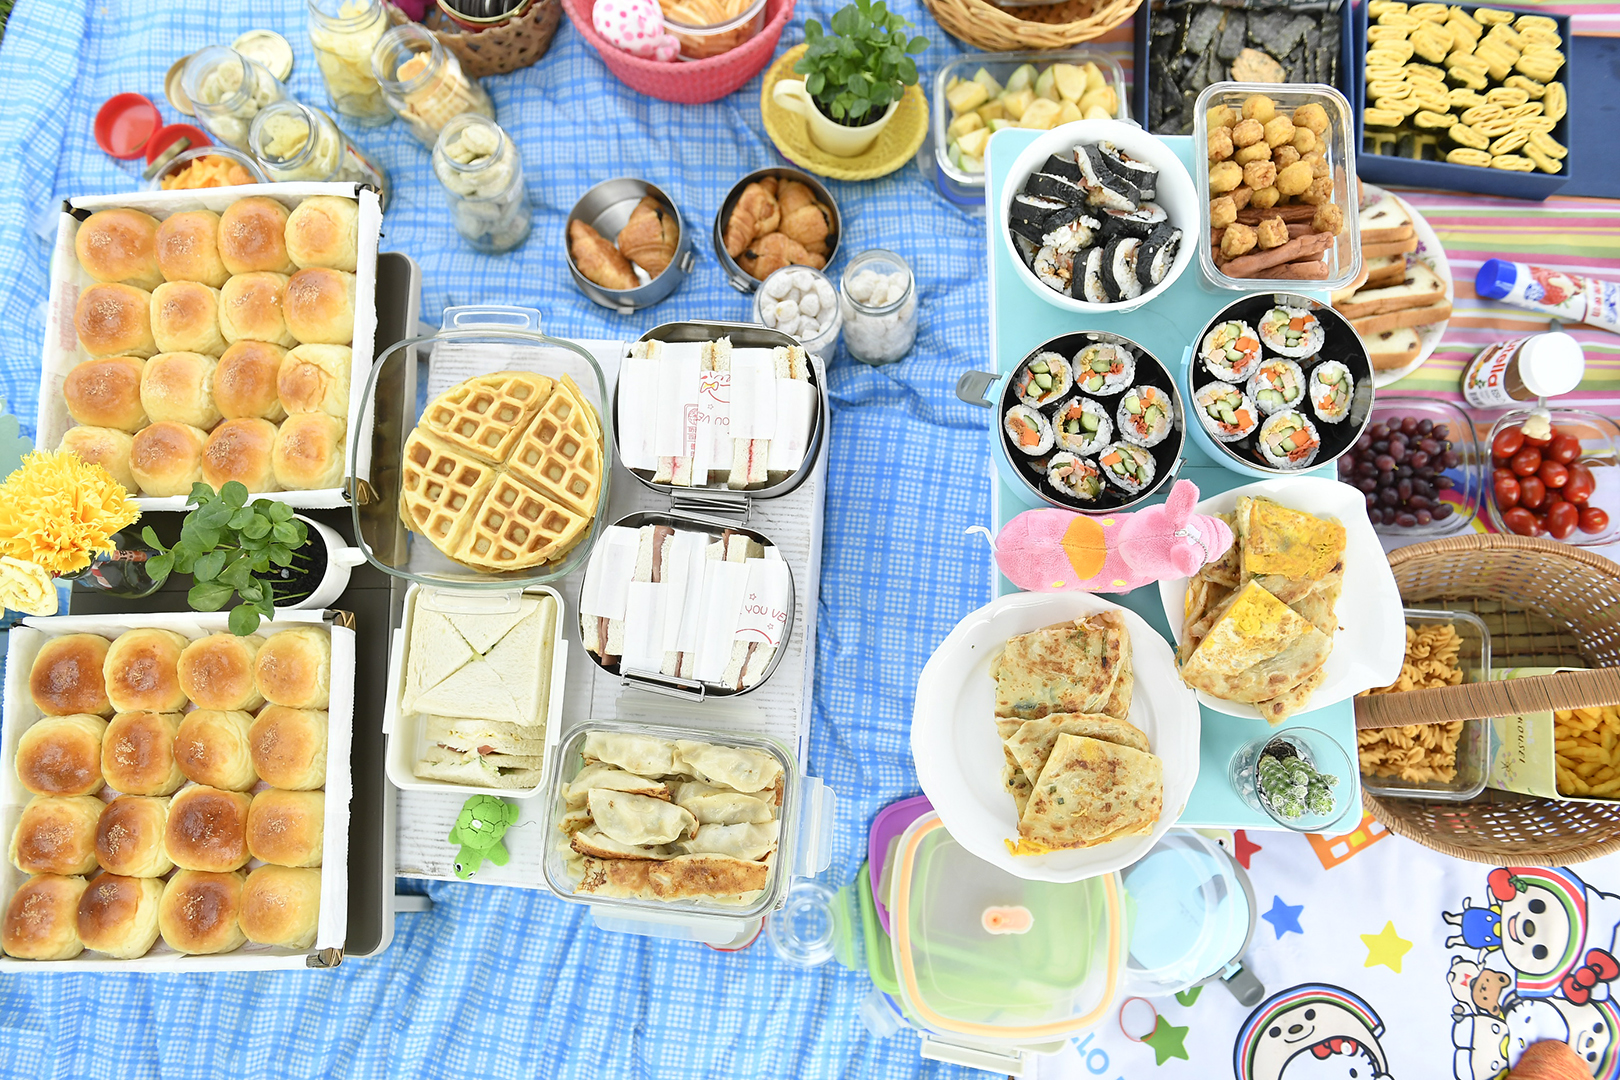 People prepare their own picnic food